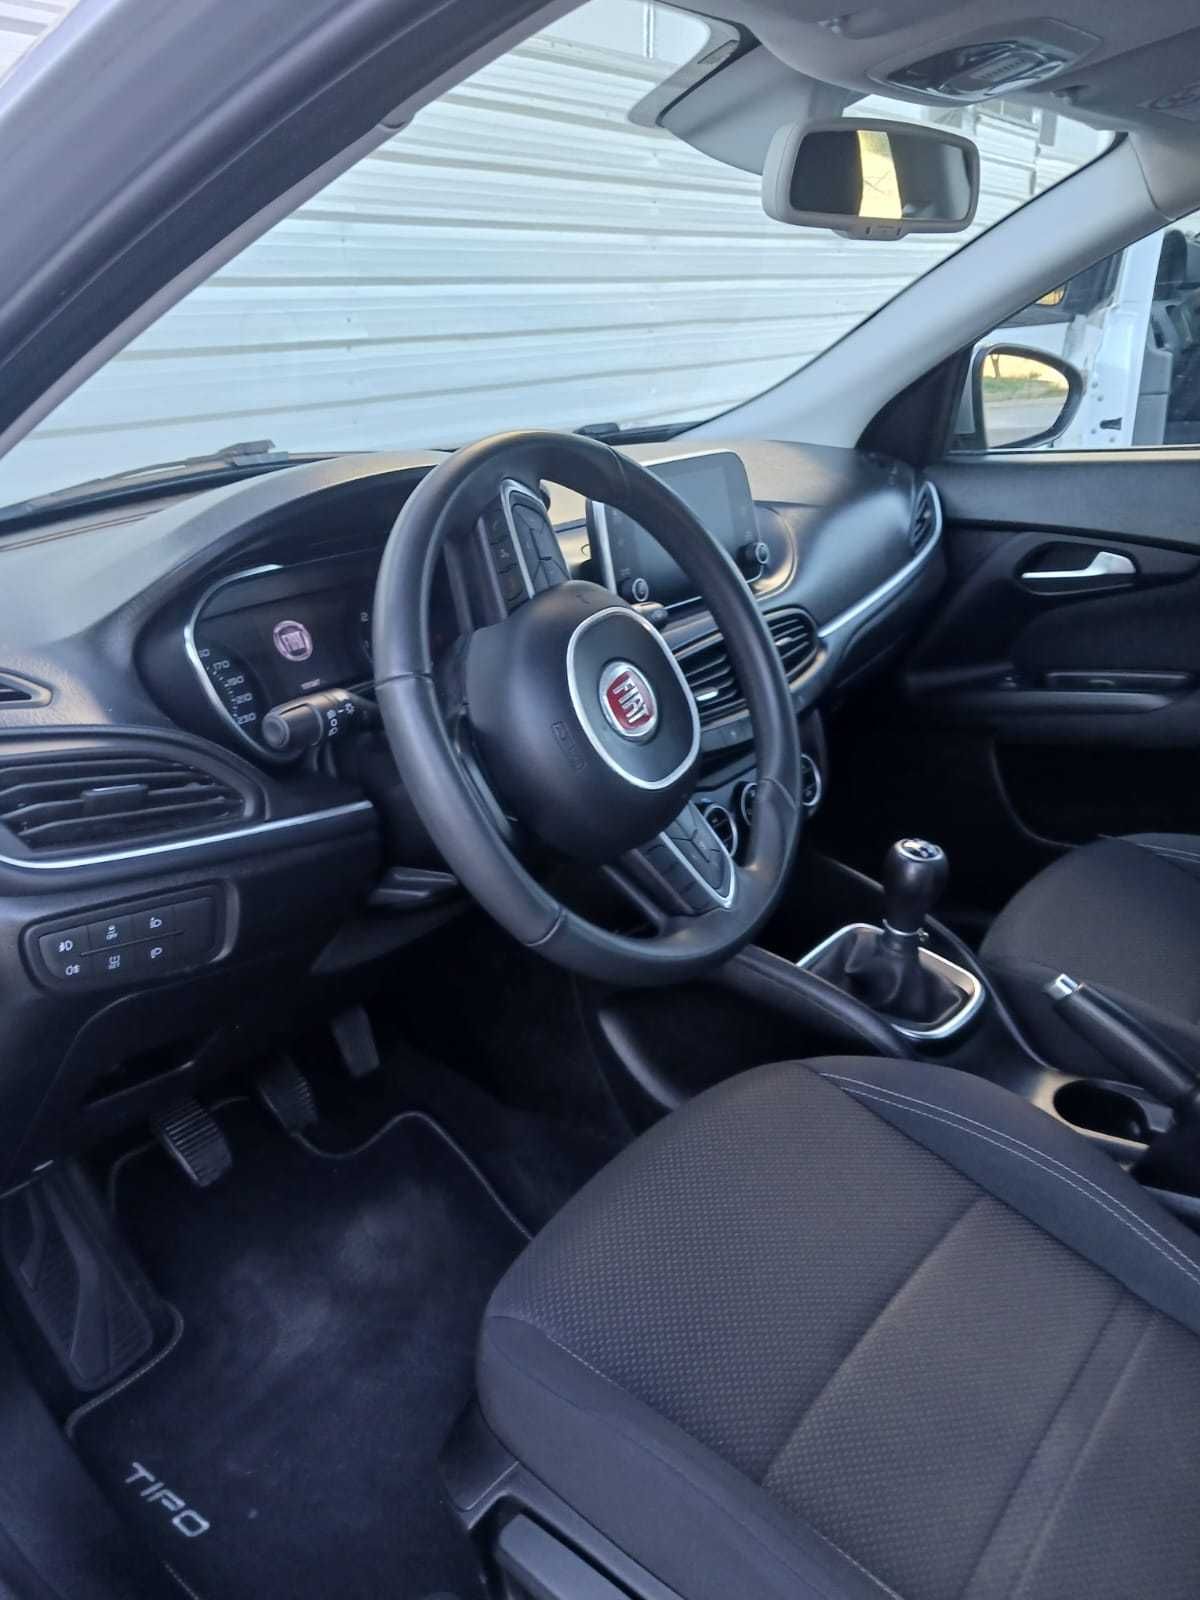 Fiat Tipo 2017 1.3 Multijet